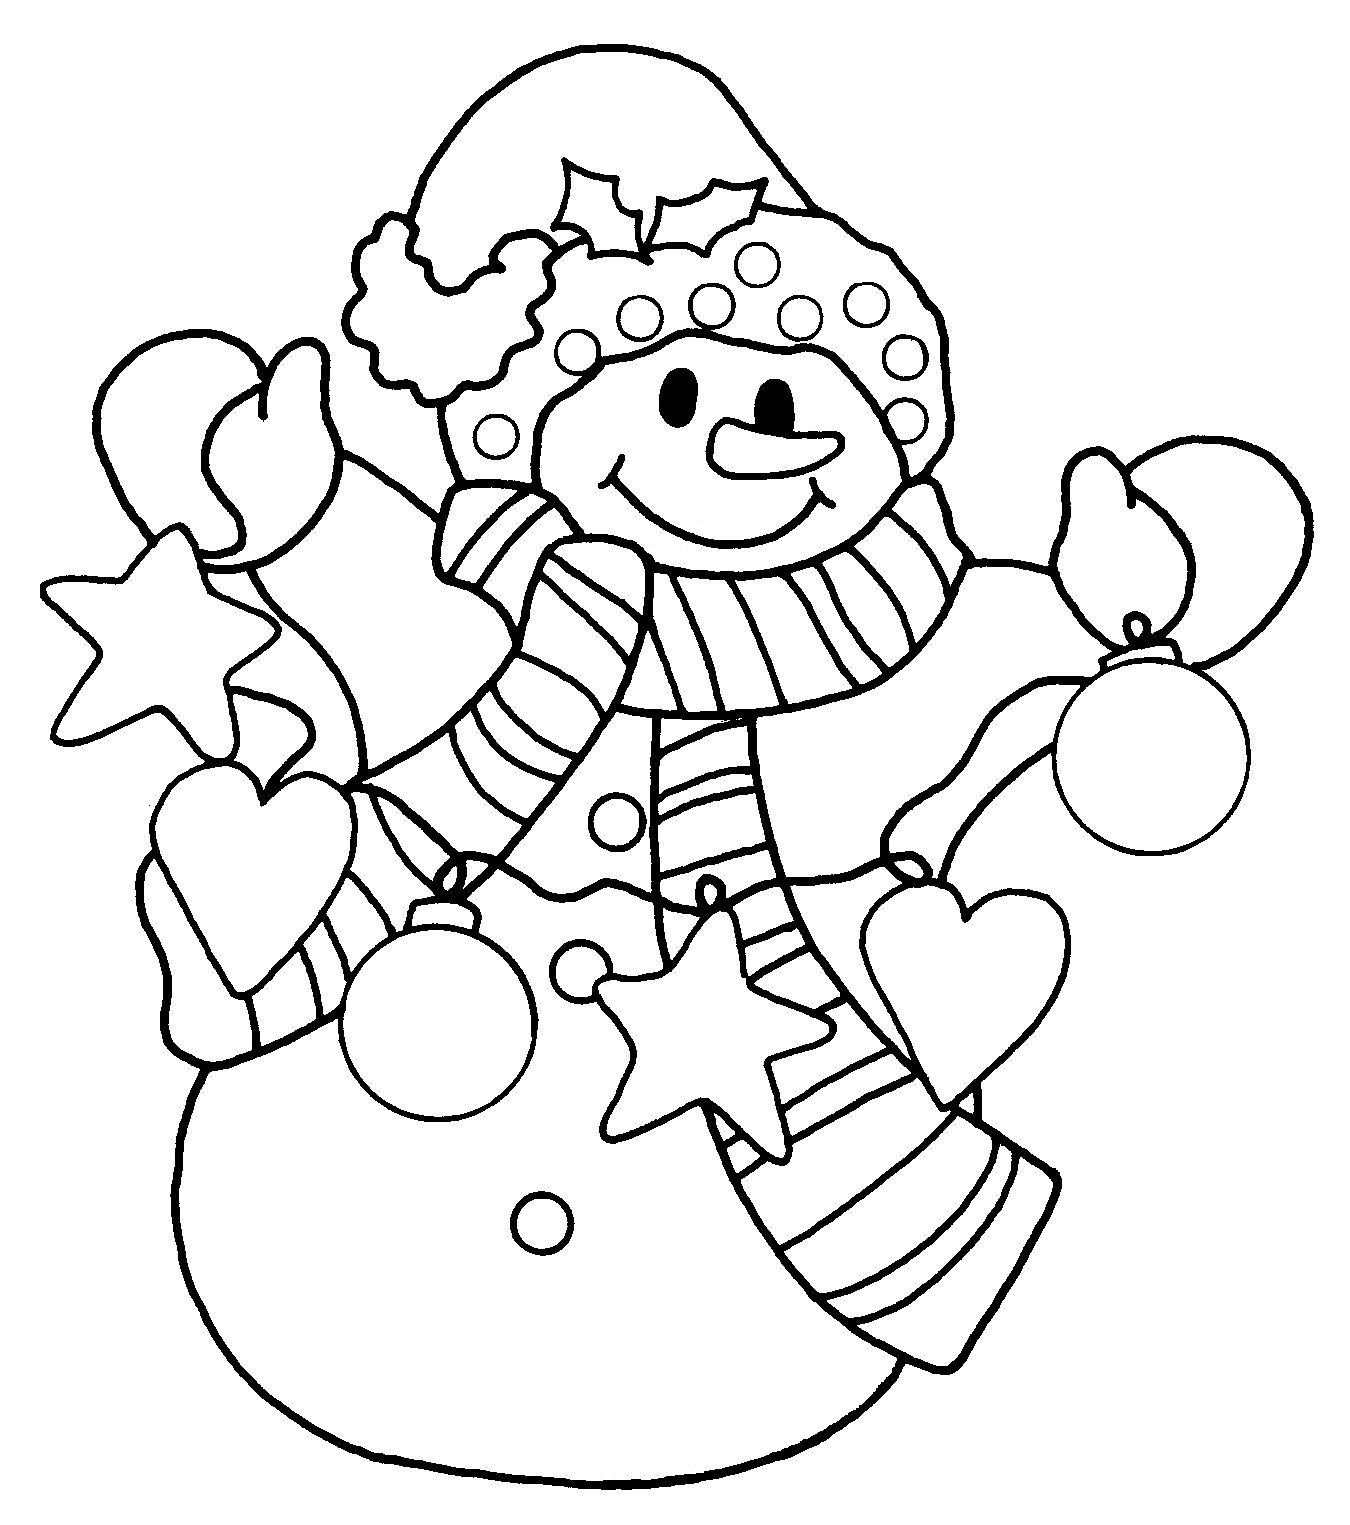 Snowman Printable Coloring Pages
 DZ Doodles Digital Stamps Oodles of Doodles News Freebie